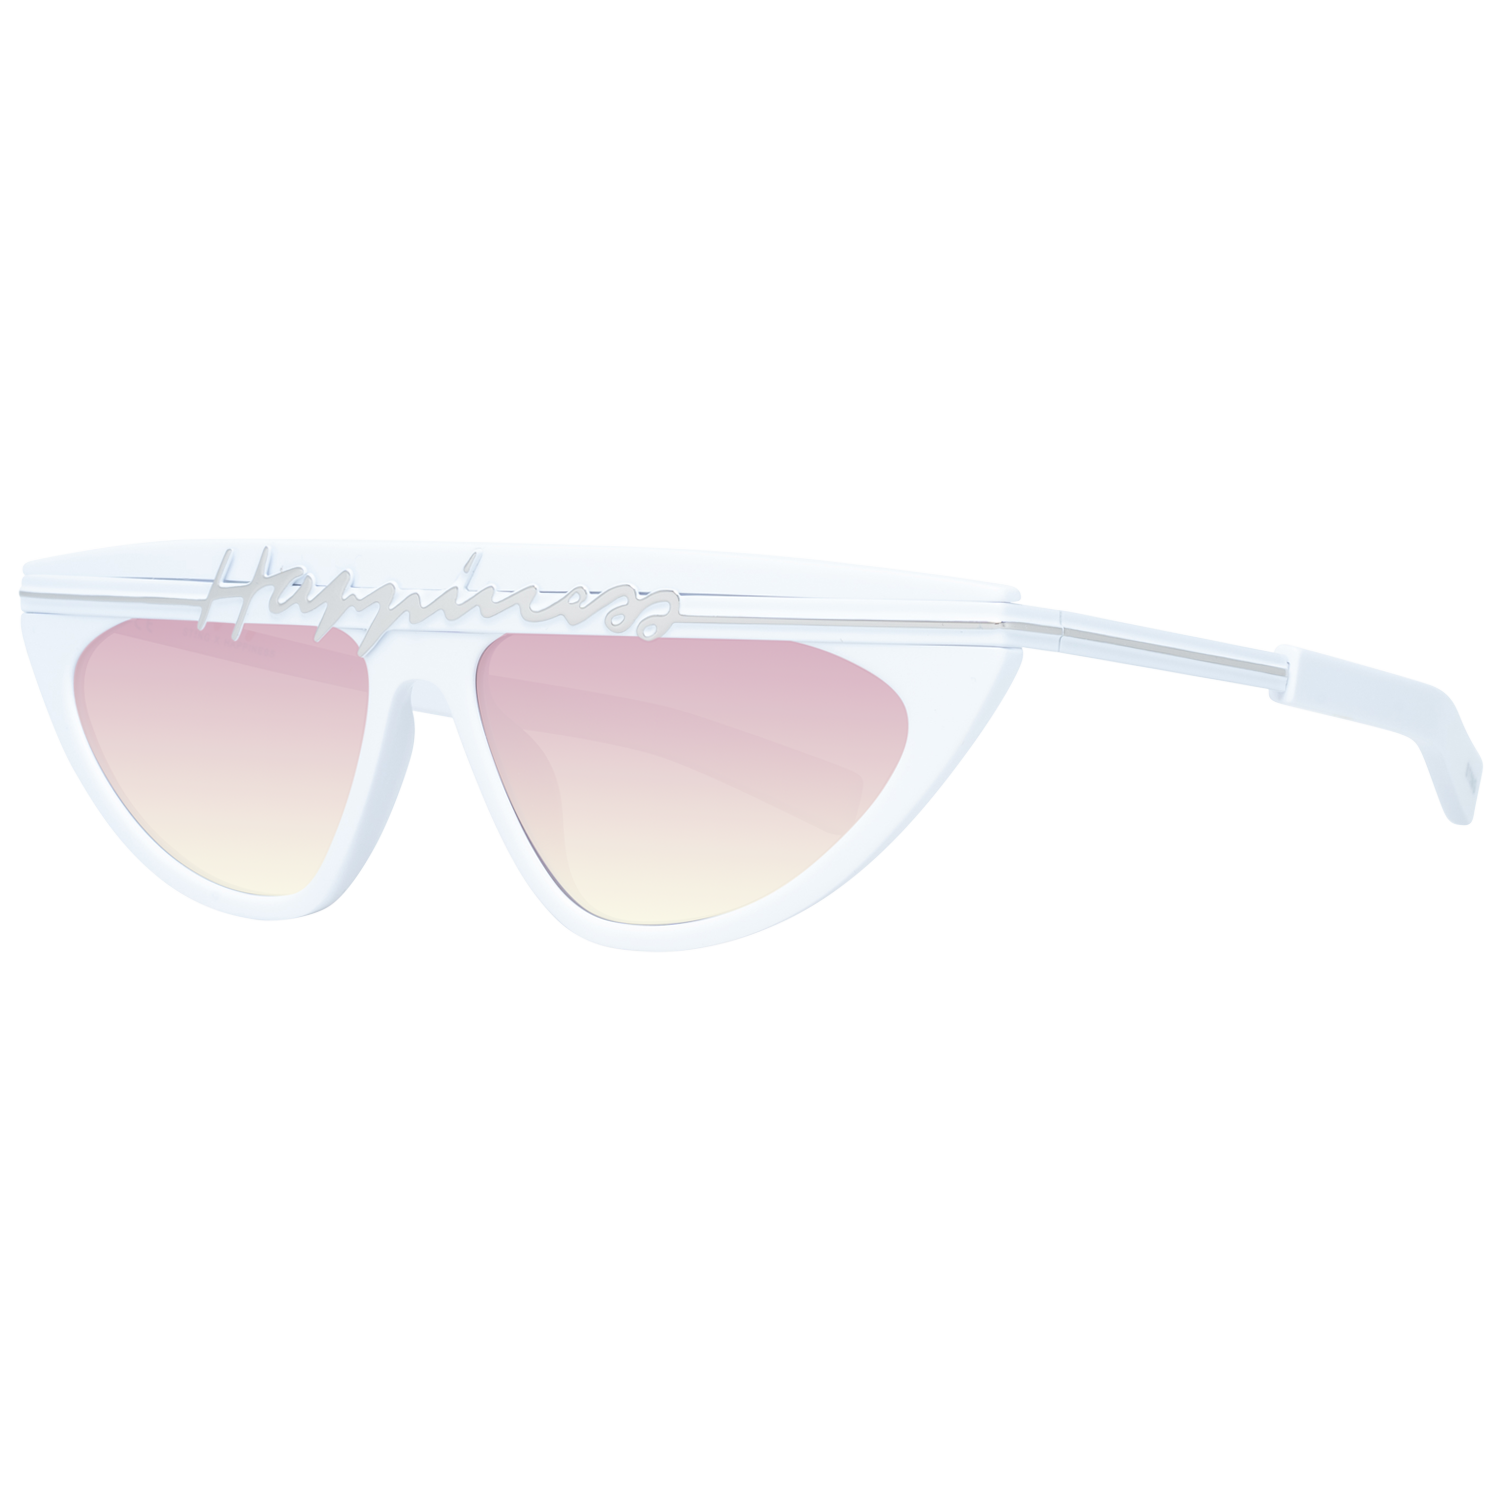 Sting Sunglasses Sting Sunglasses SST367 847X 56 Eyeglasses Eyewear UK USA Australia 